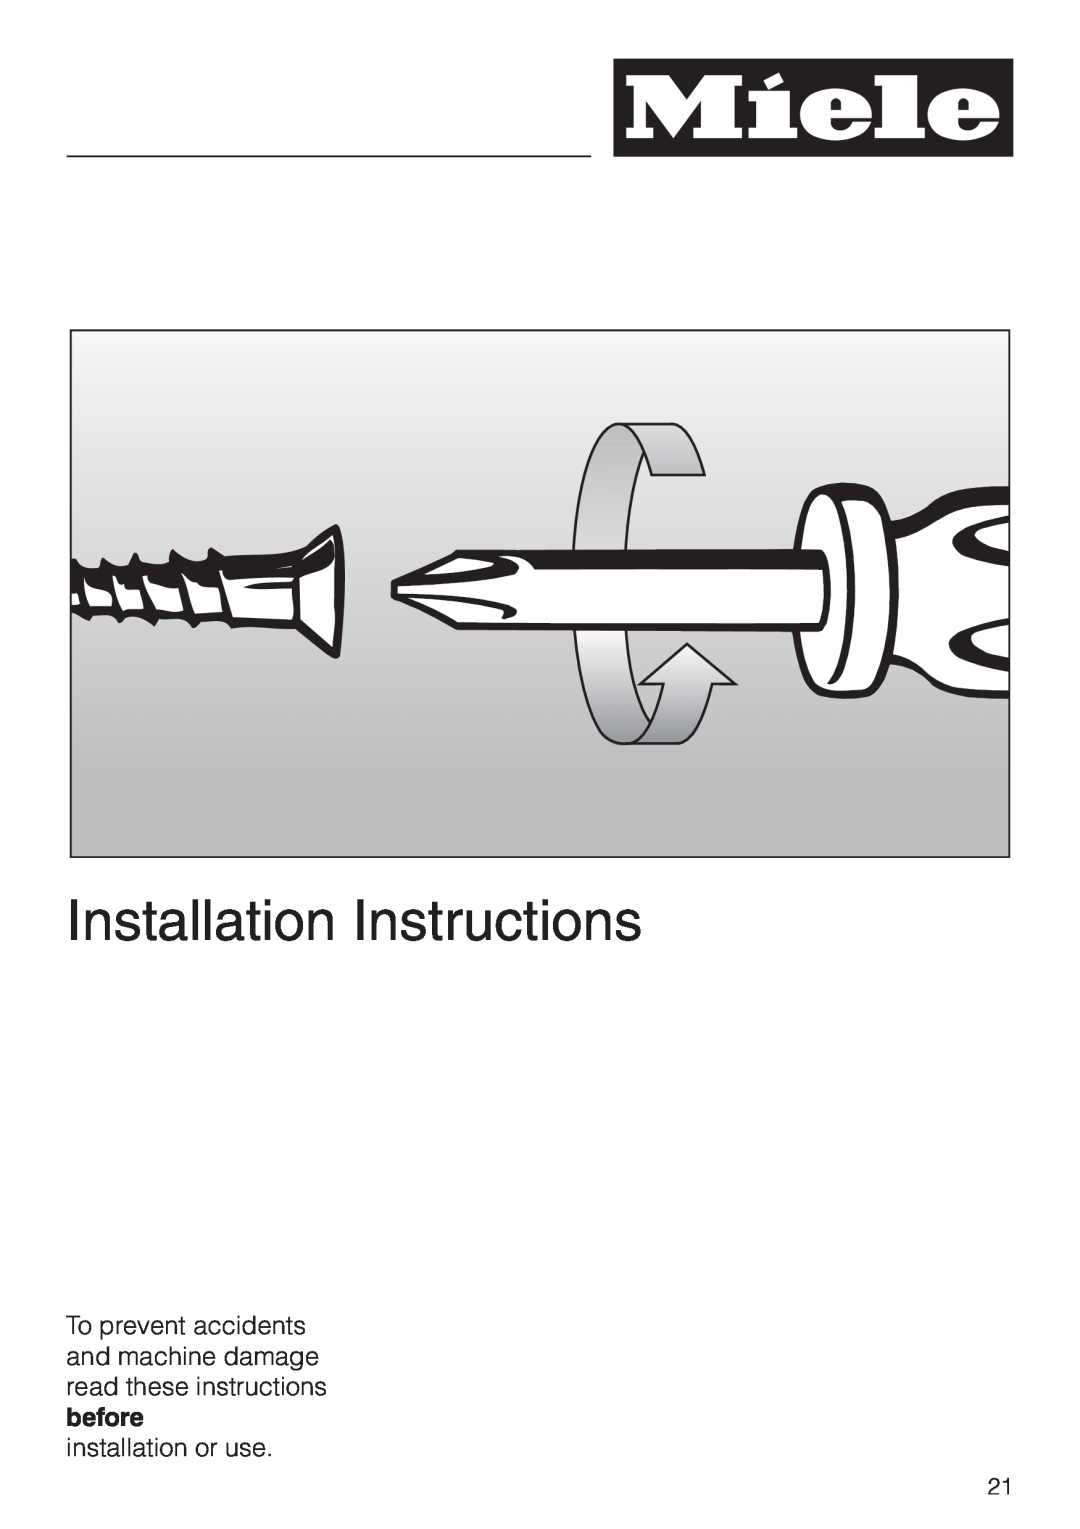 Miele KM 3474, KM 3485, KM 3484 installation instructions Installation Instructions, installation or use 